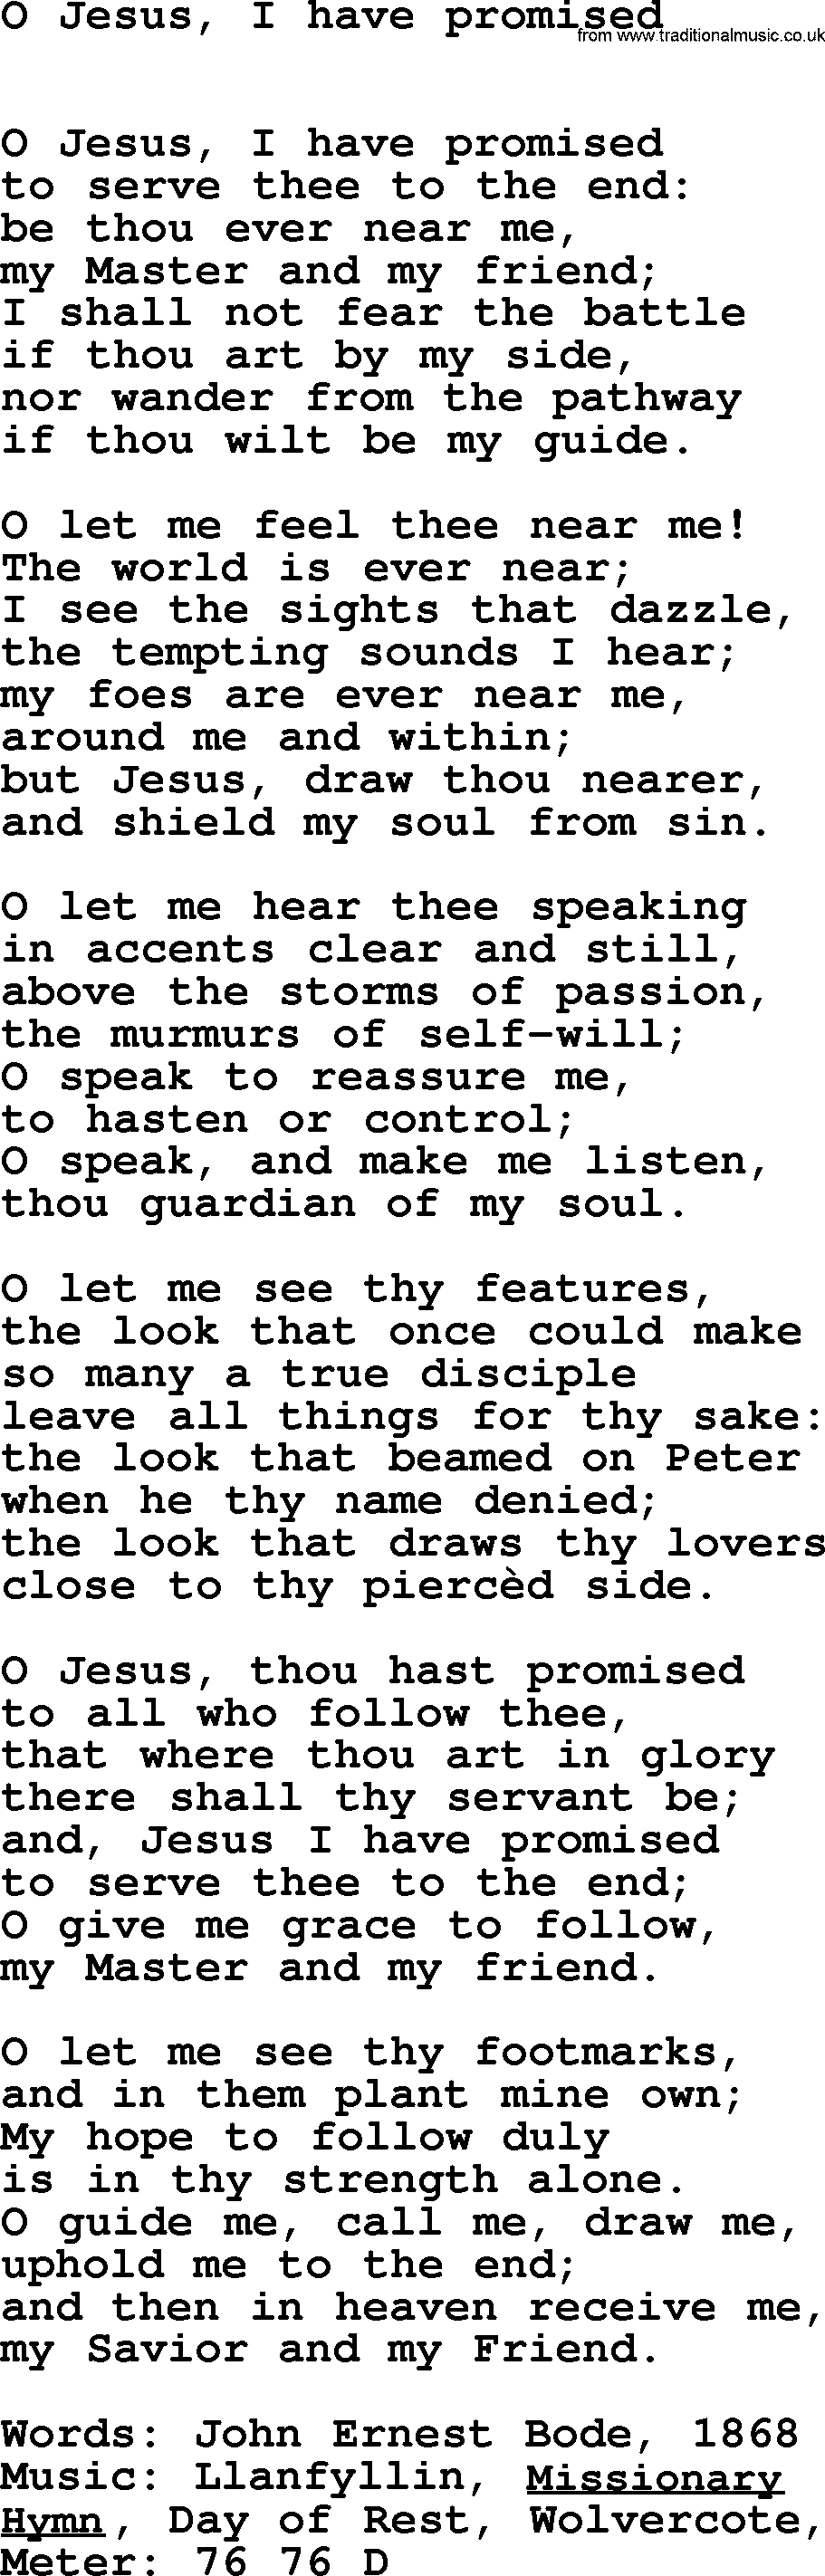 Book of Common Praise Hymn: O Jesus, I Have Promised.txt lyrics with midi music